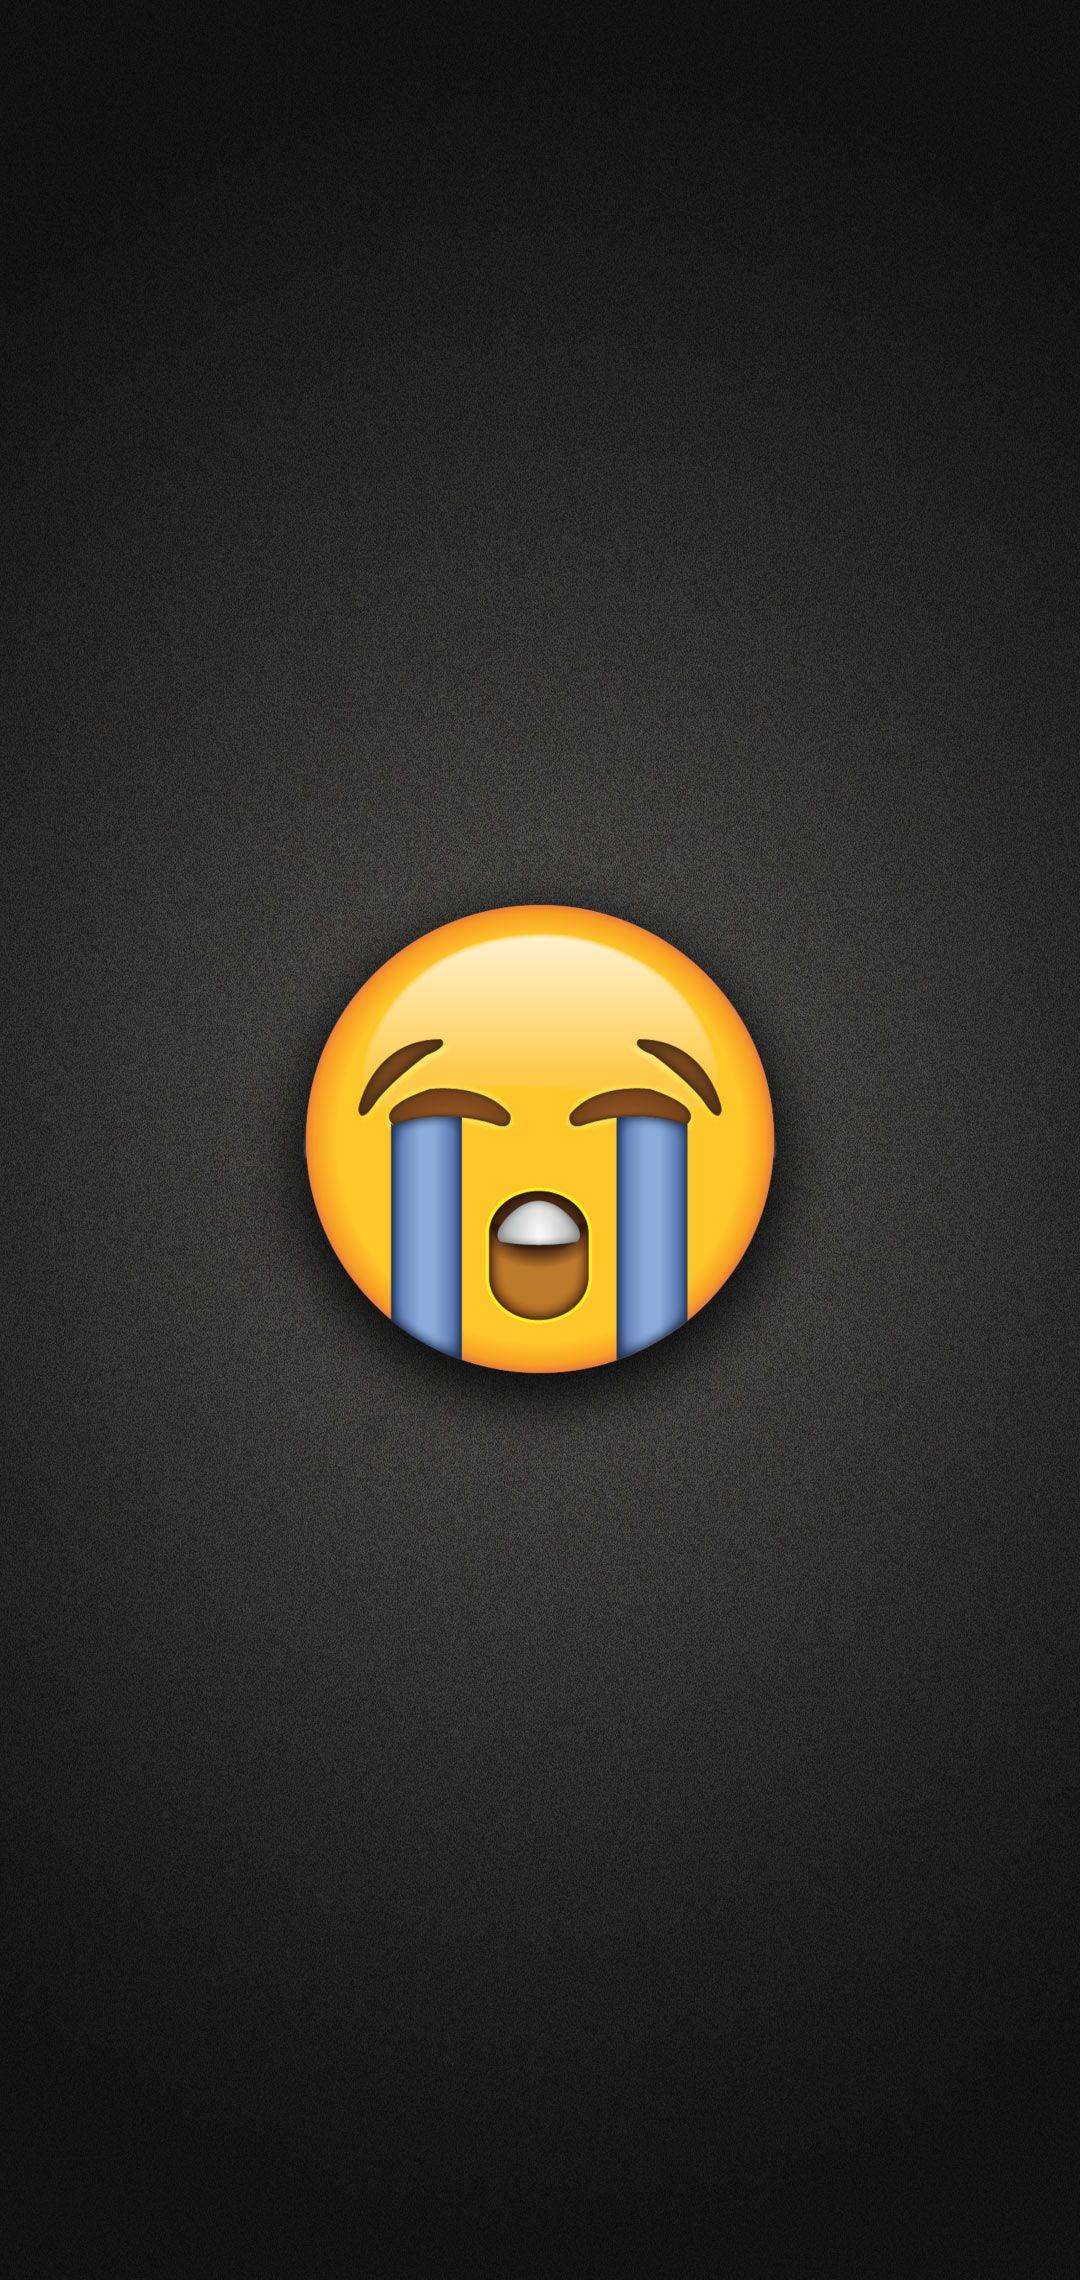 Sad Emoji Wallpaper APK for Android Download